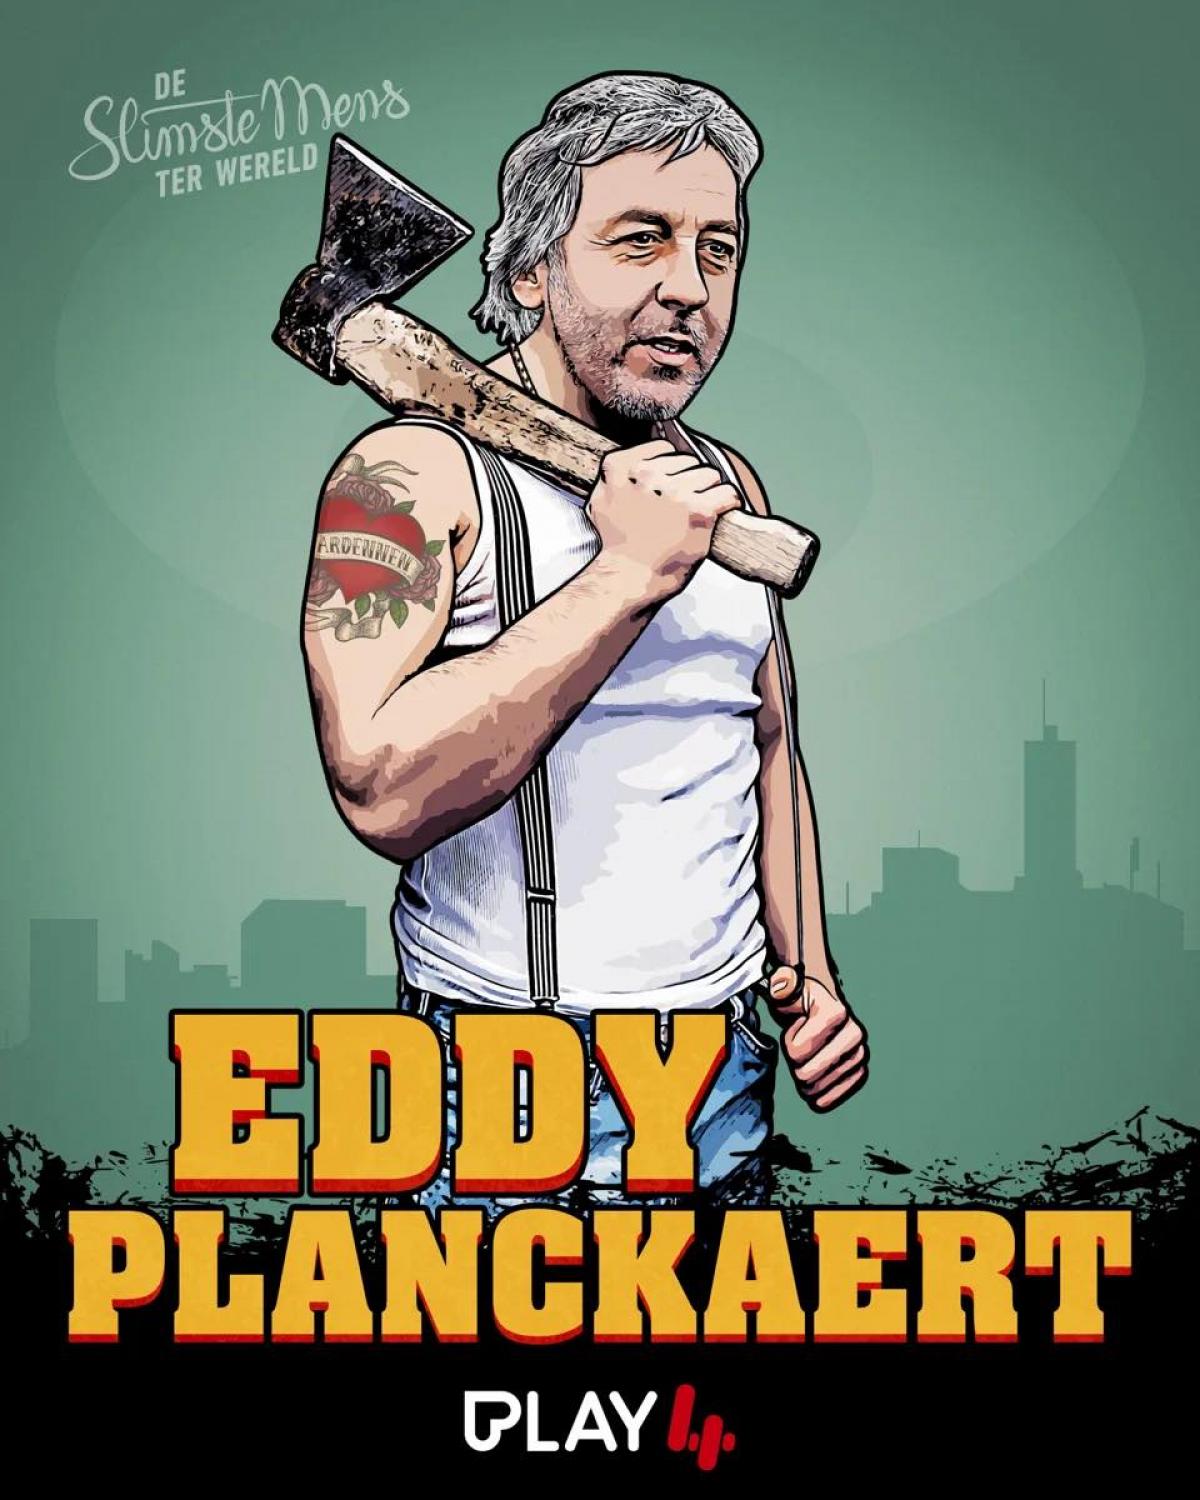 Ex-wielrenner en tv-persoonlijkheid Eddy Planckaert